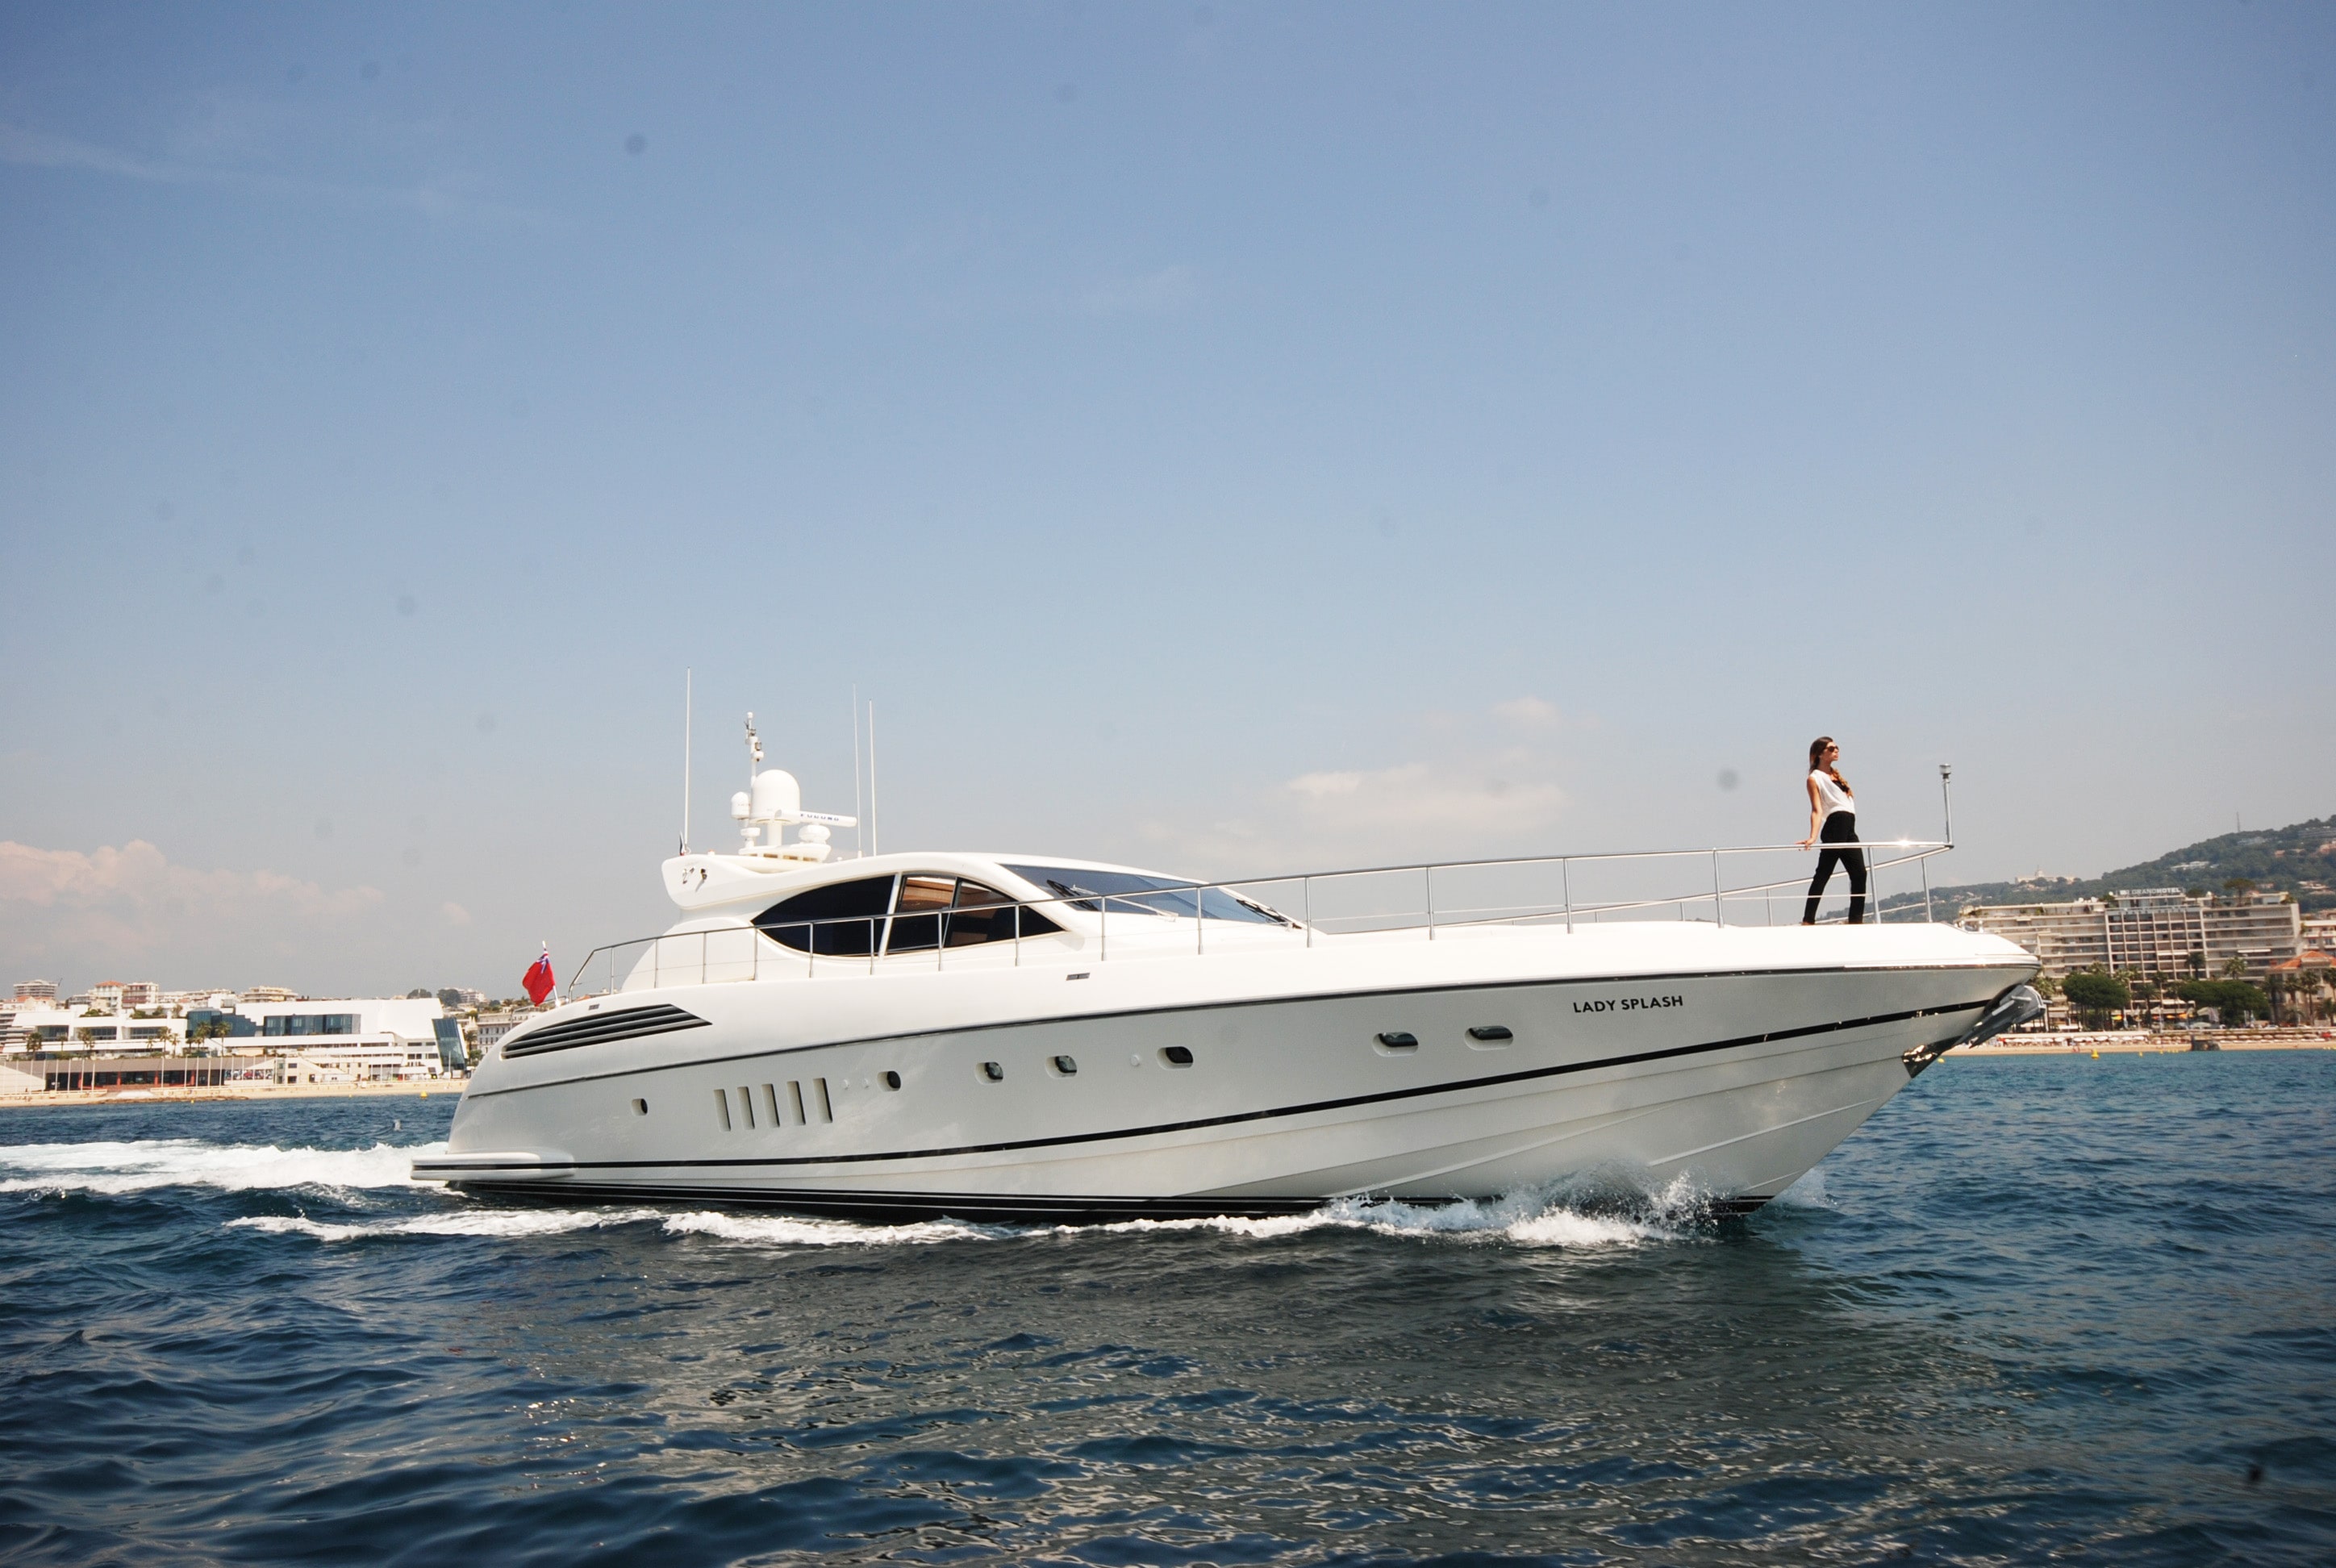 Leopard Arno 24m Lady Splash Yacht For Charter11